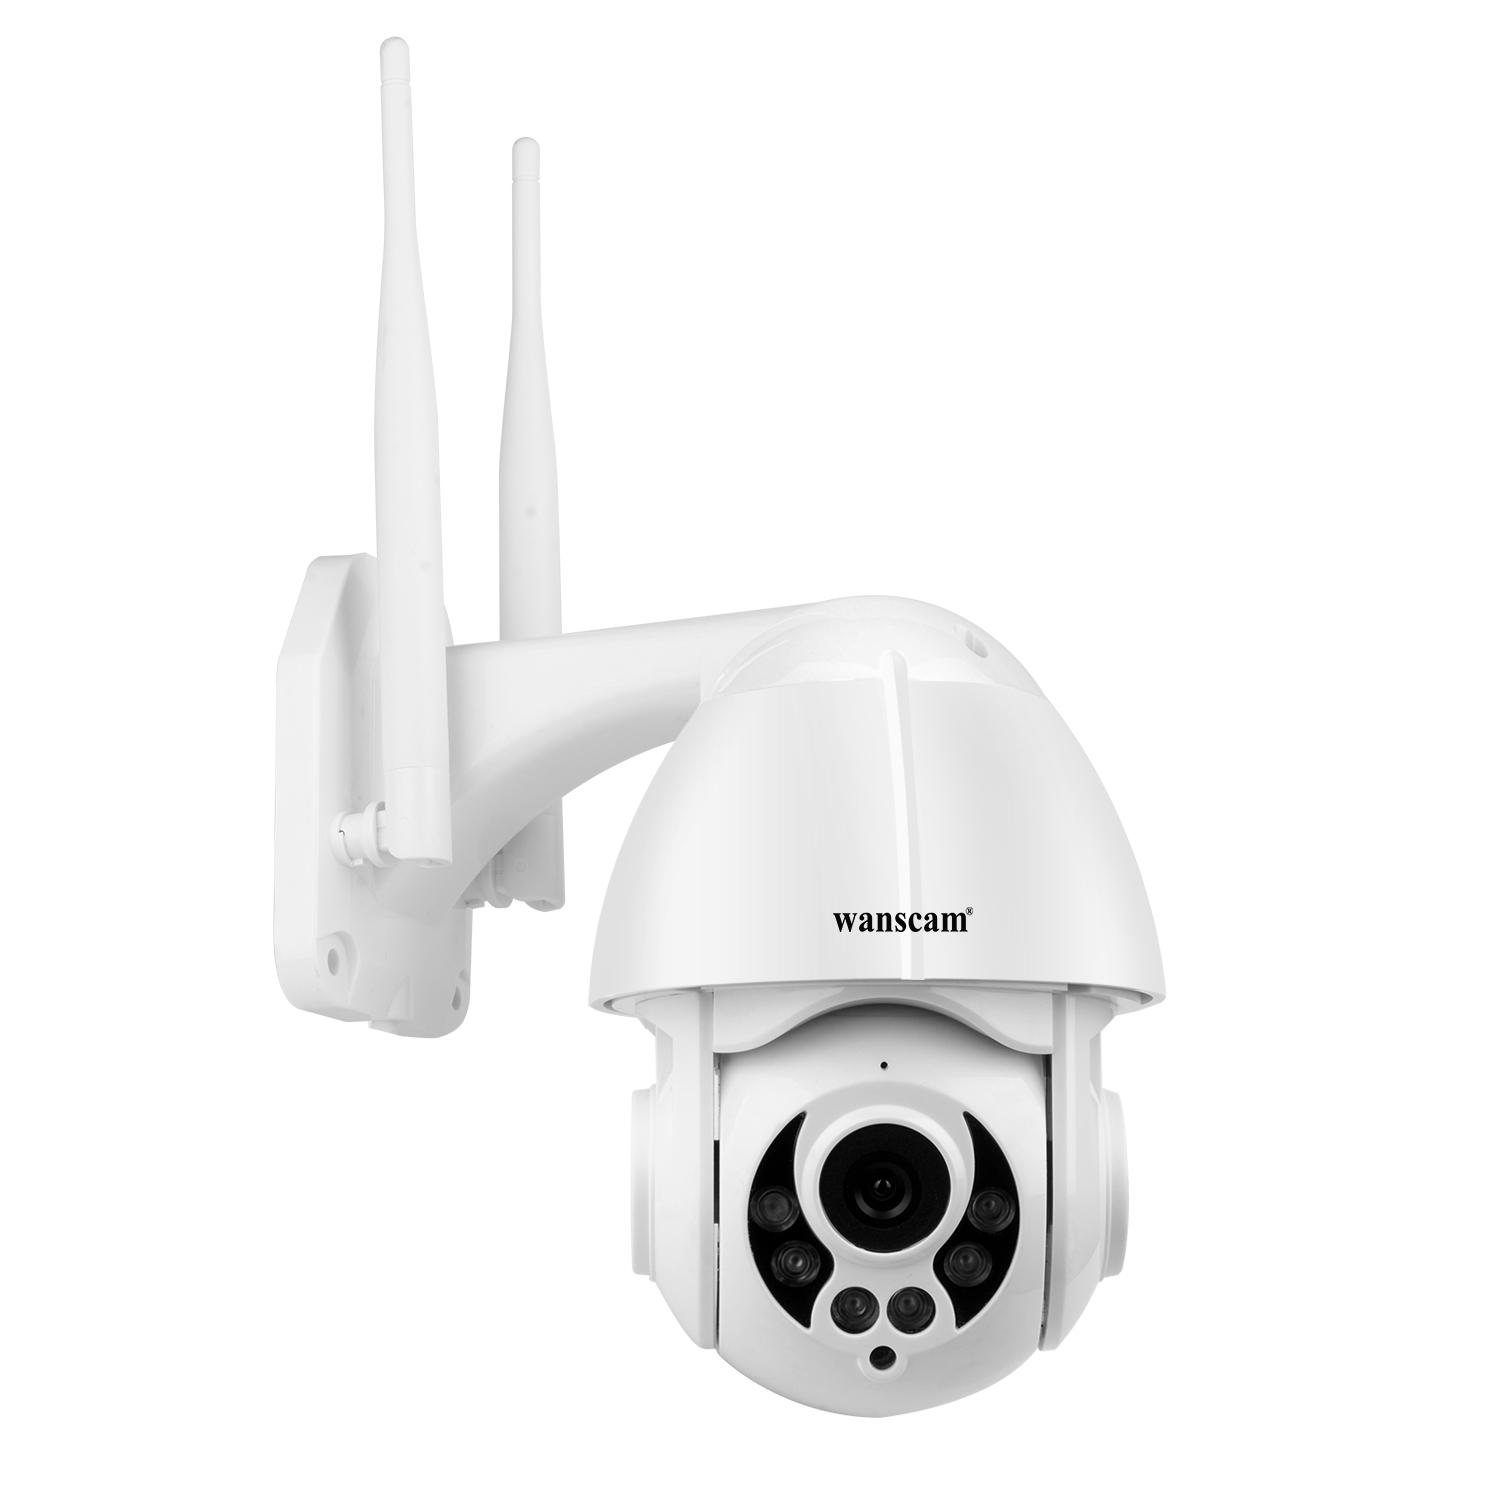 Wanscam K38D 1080P WiFi IP Camera EU Plug Face Detect Auto Tracking 4X Zoom Two-way Audio P2P CCTV Security Surveillance